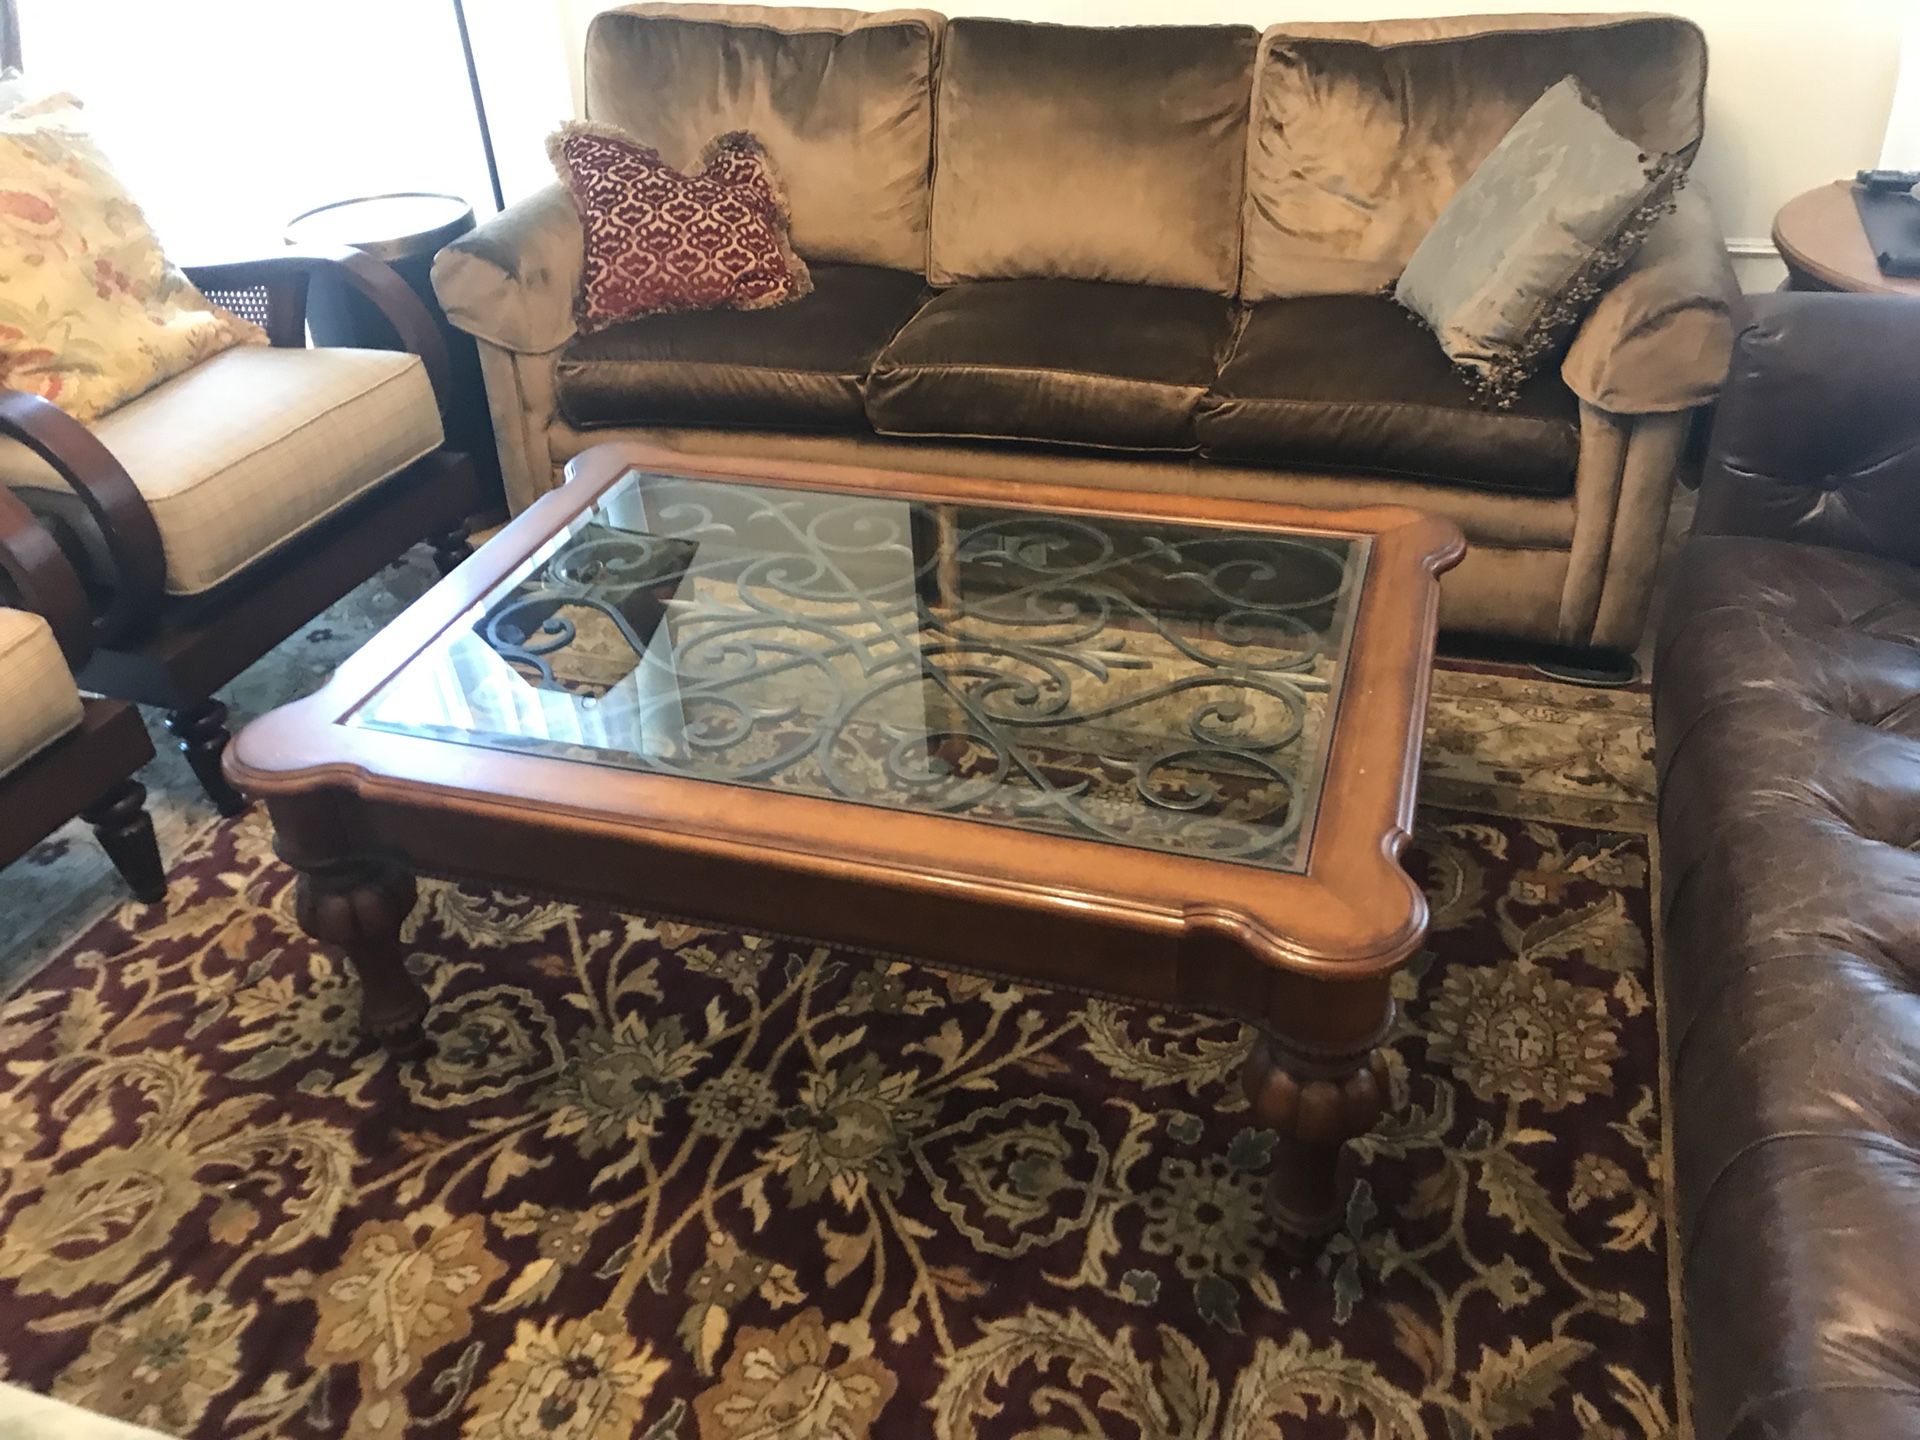 Gorgeous Ethan Allen coffee table!